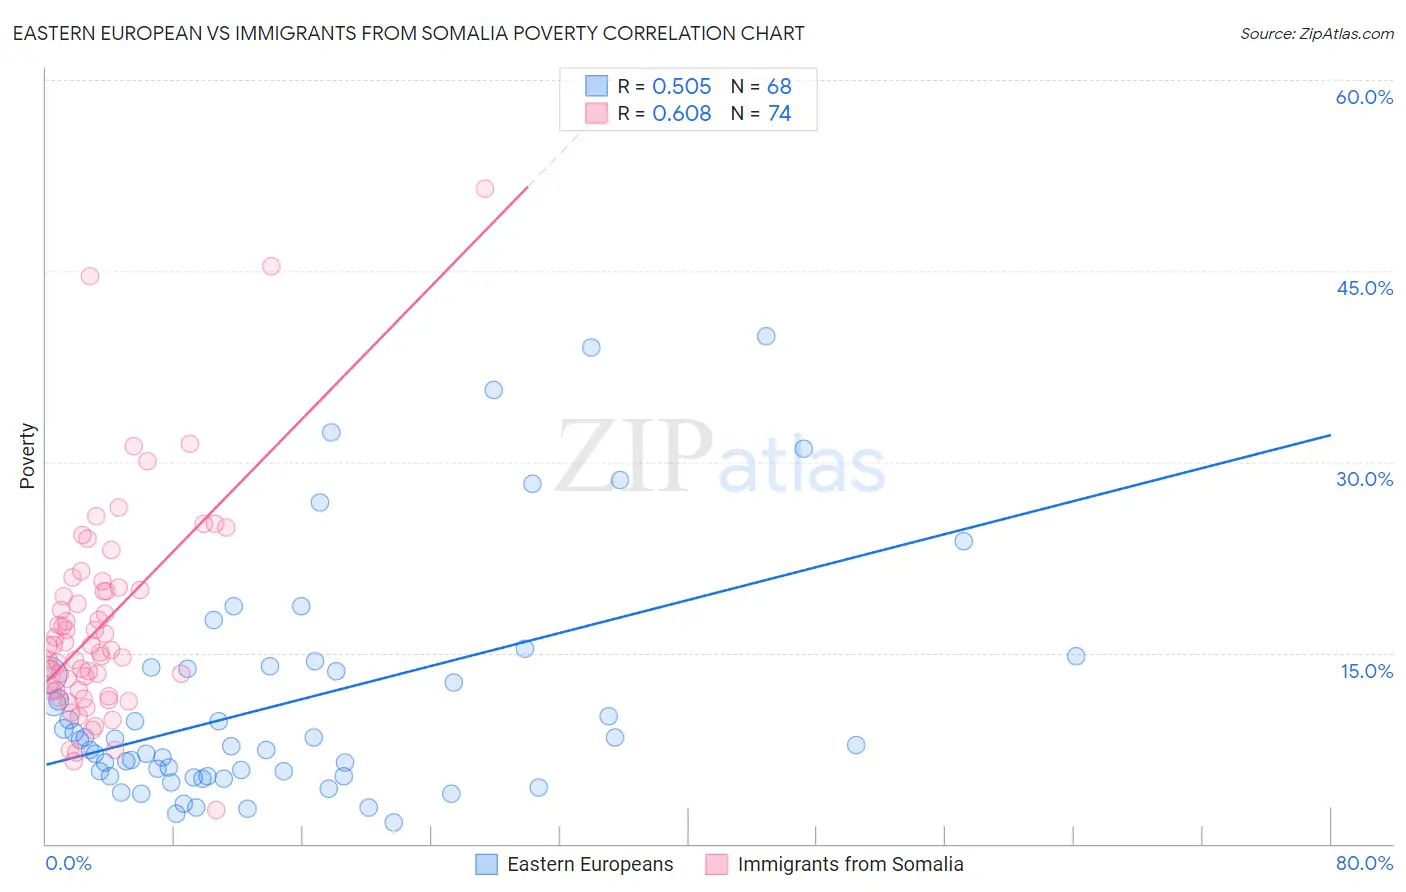 Eastern European vs Immigrants from Somalia Poverty